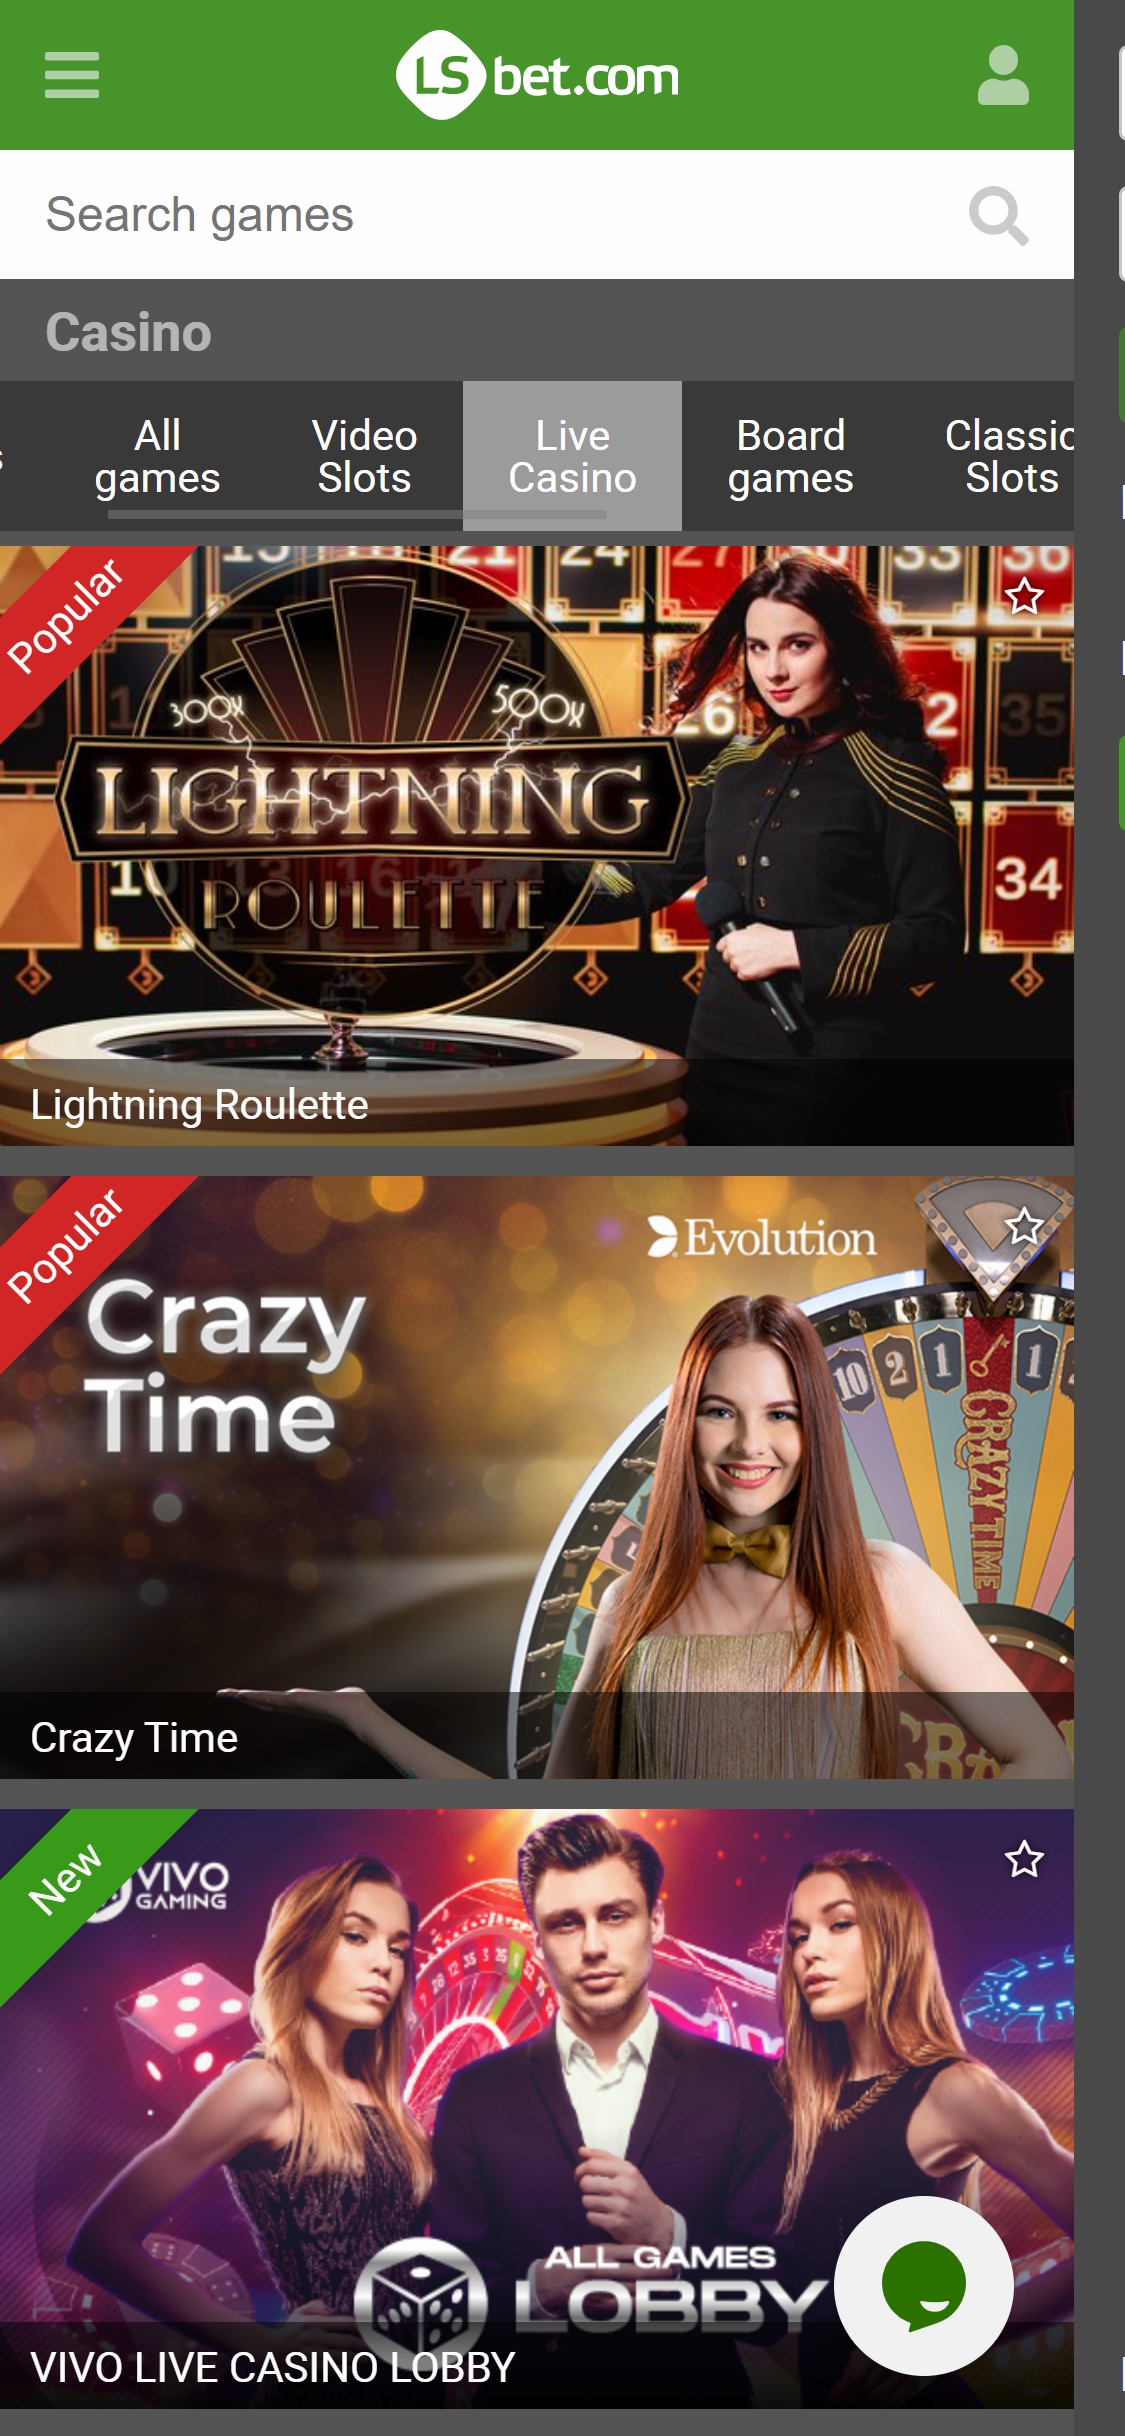 LS Bet Casino Mobile Live Dealer Games Review